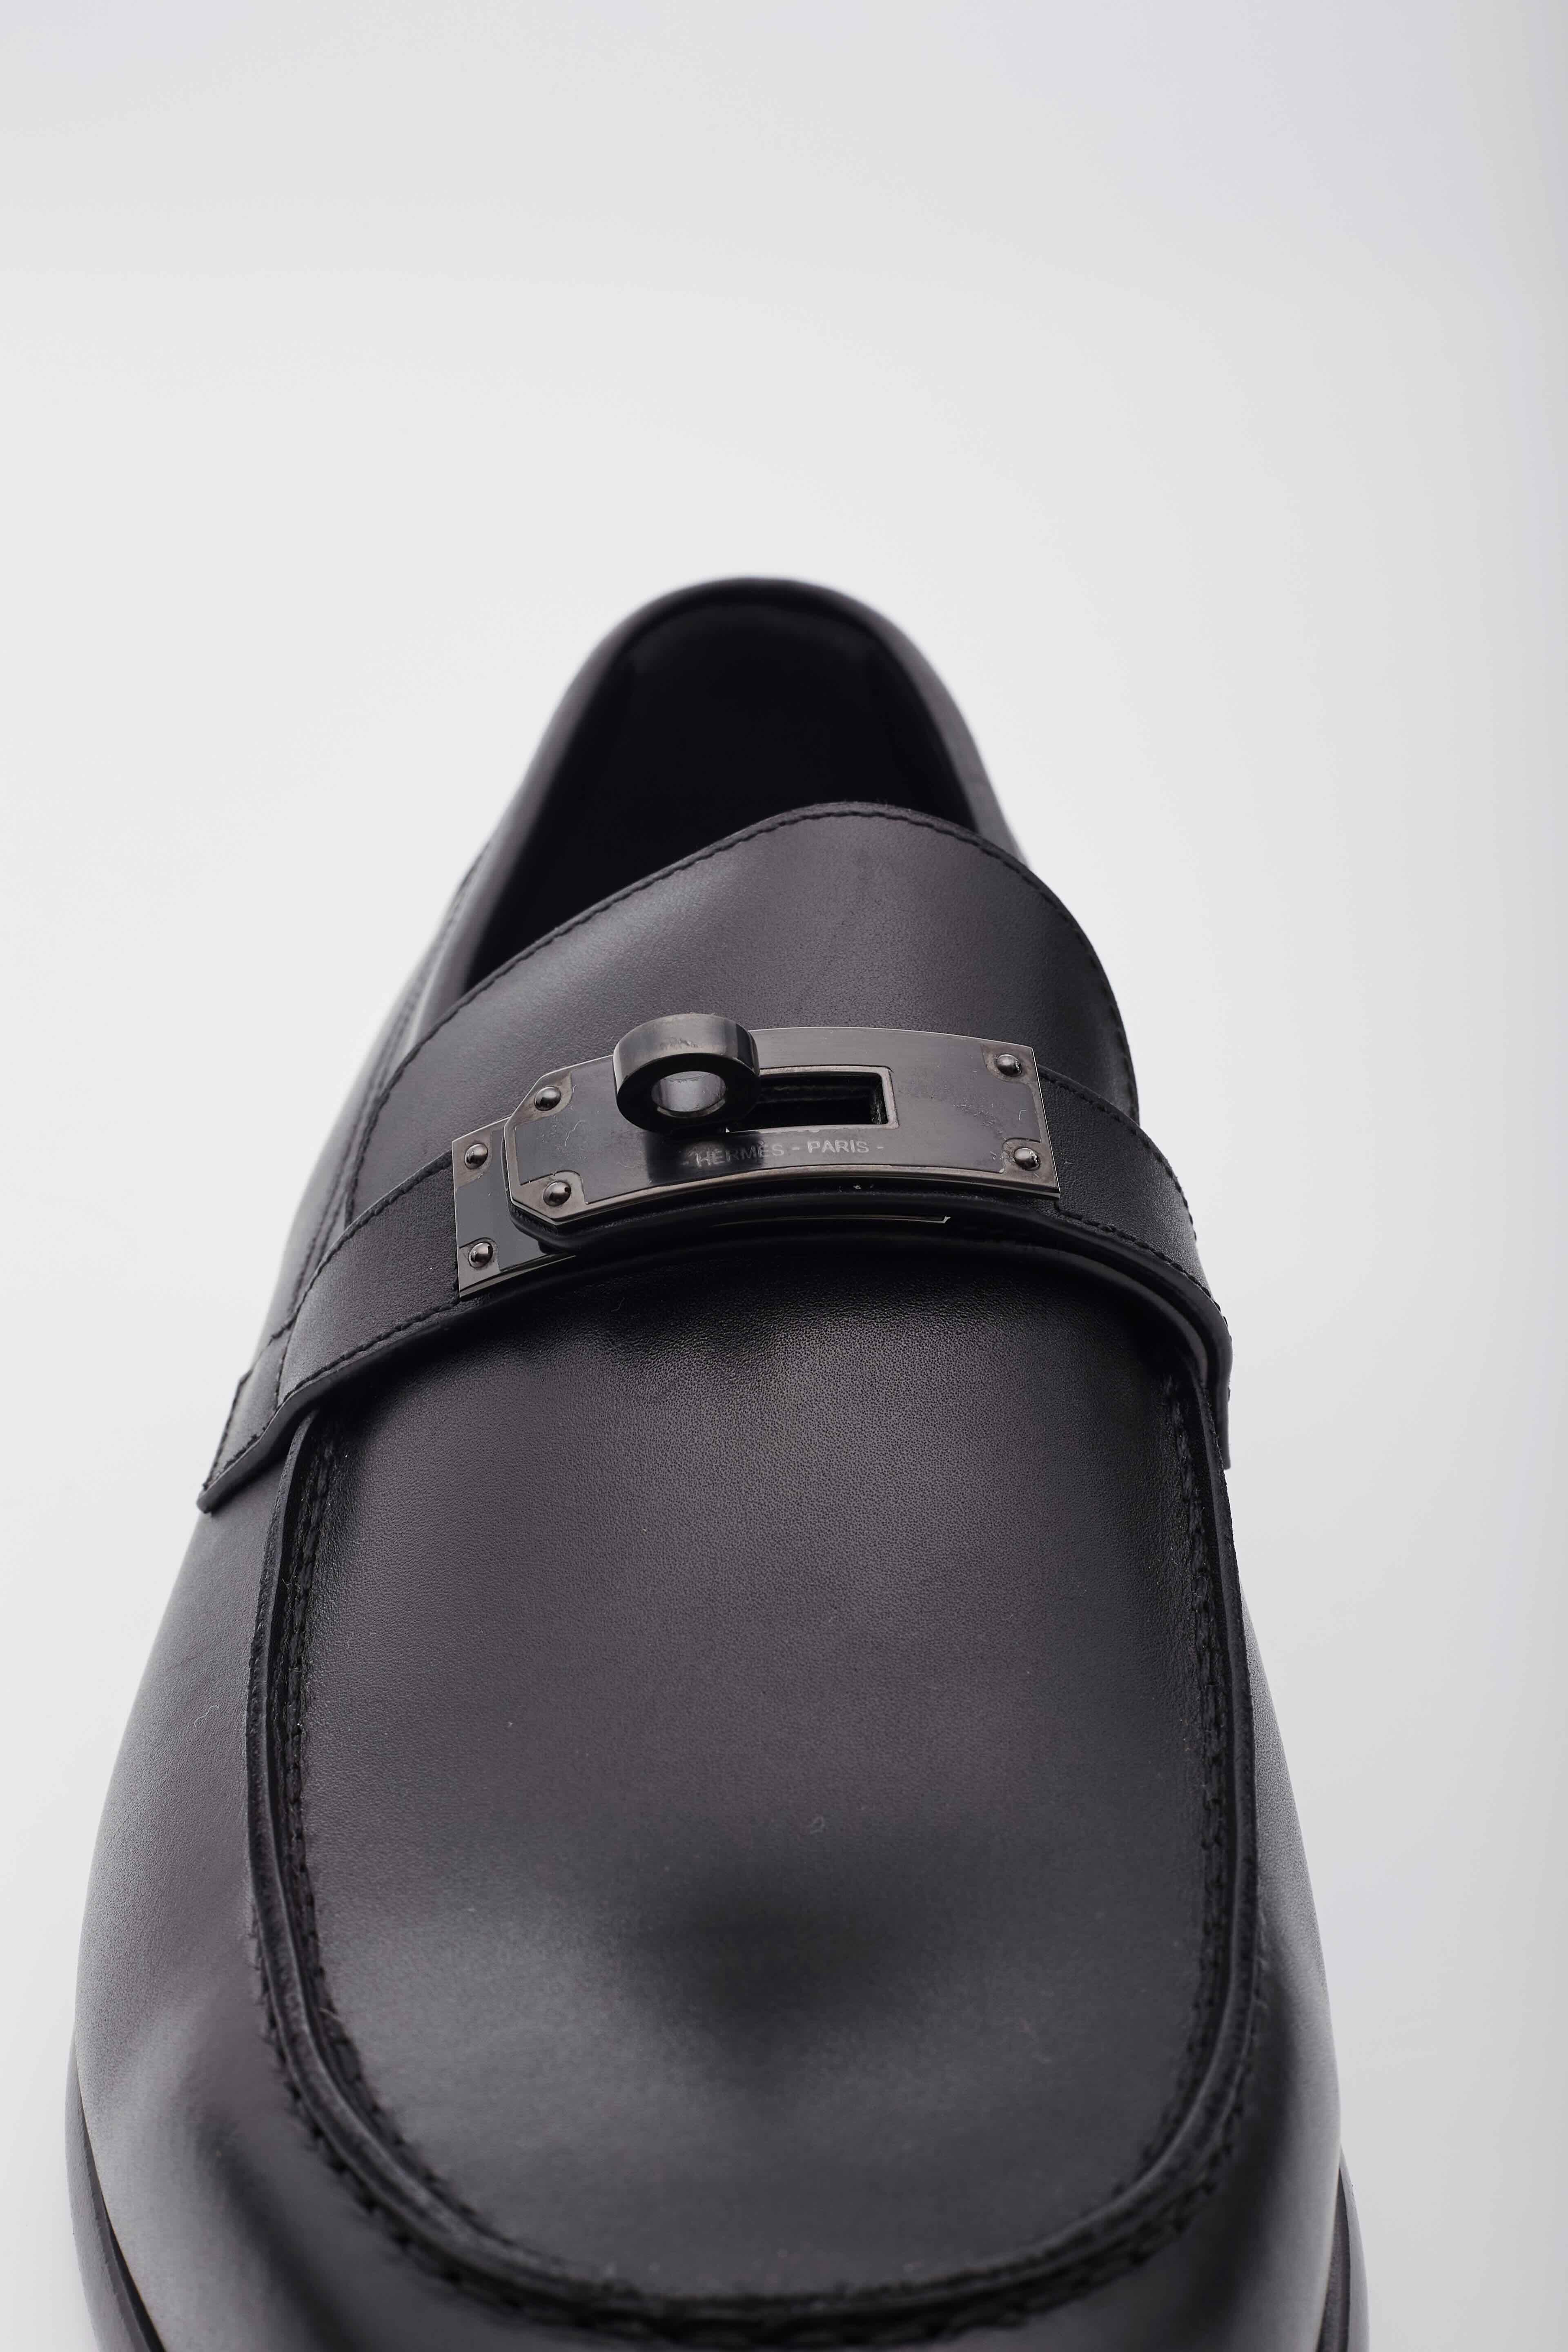 Hermes Calfskin Black Plated Kelly Buckle Destin Loafers (EU 44) For Sale 2